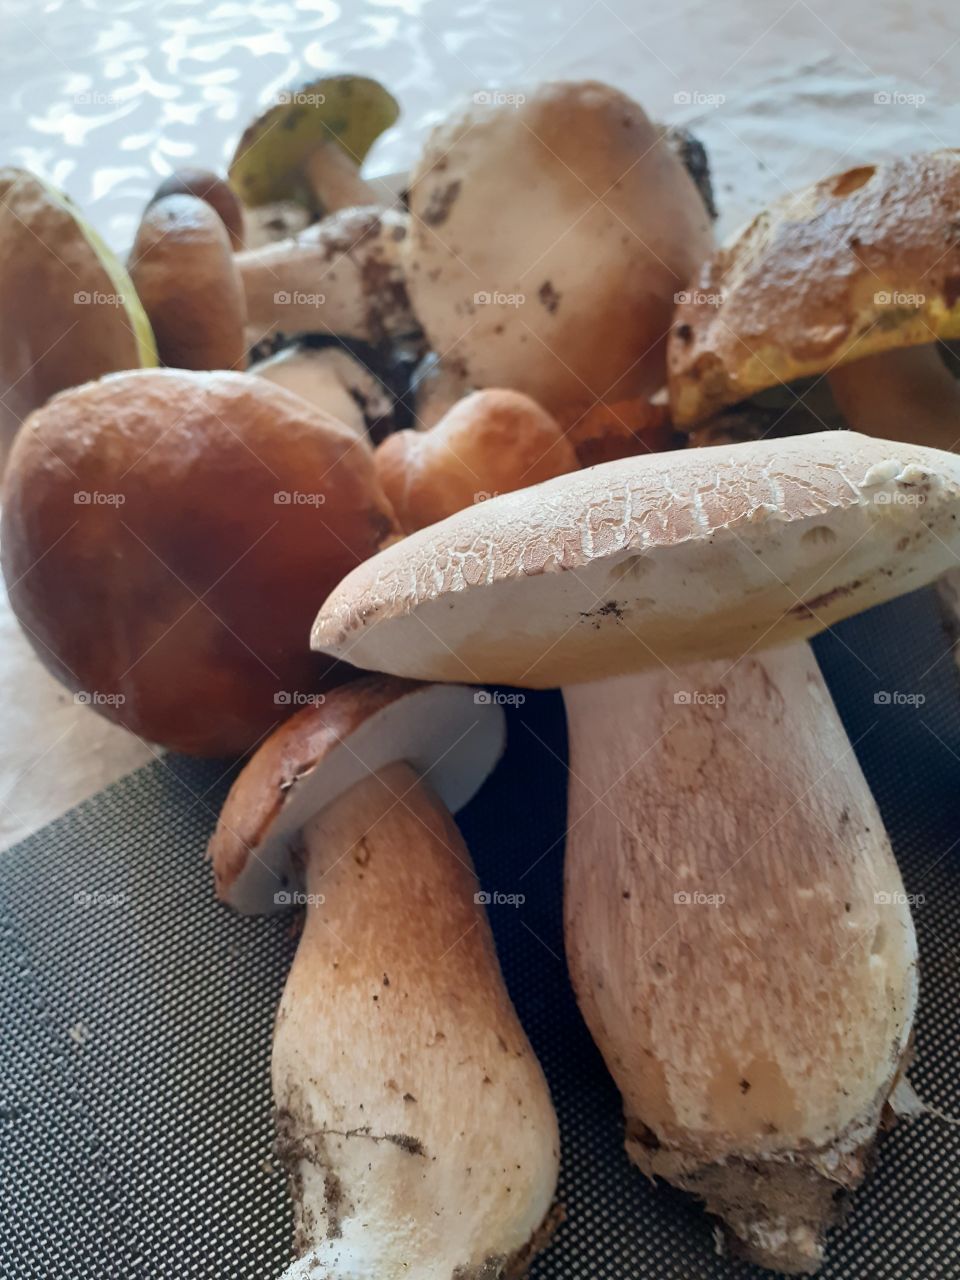 I am found of mushrooms